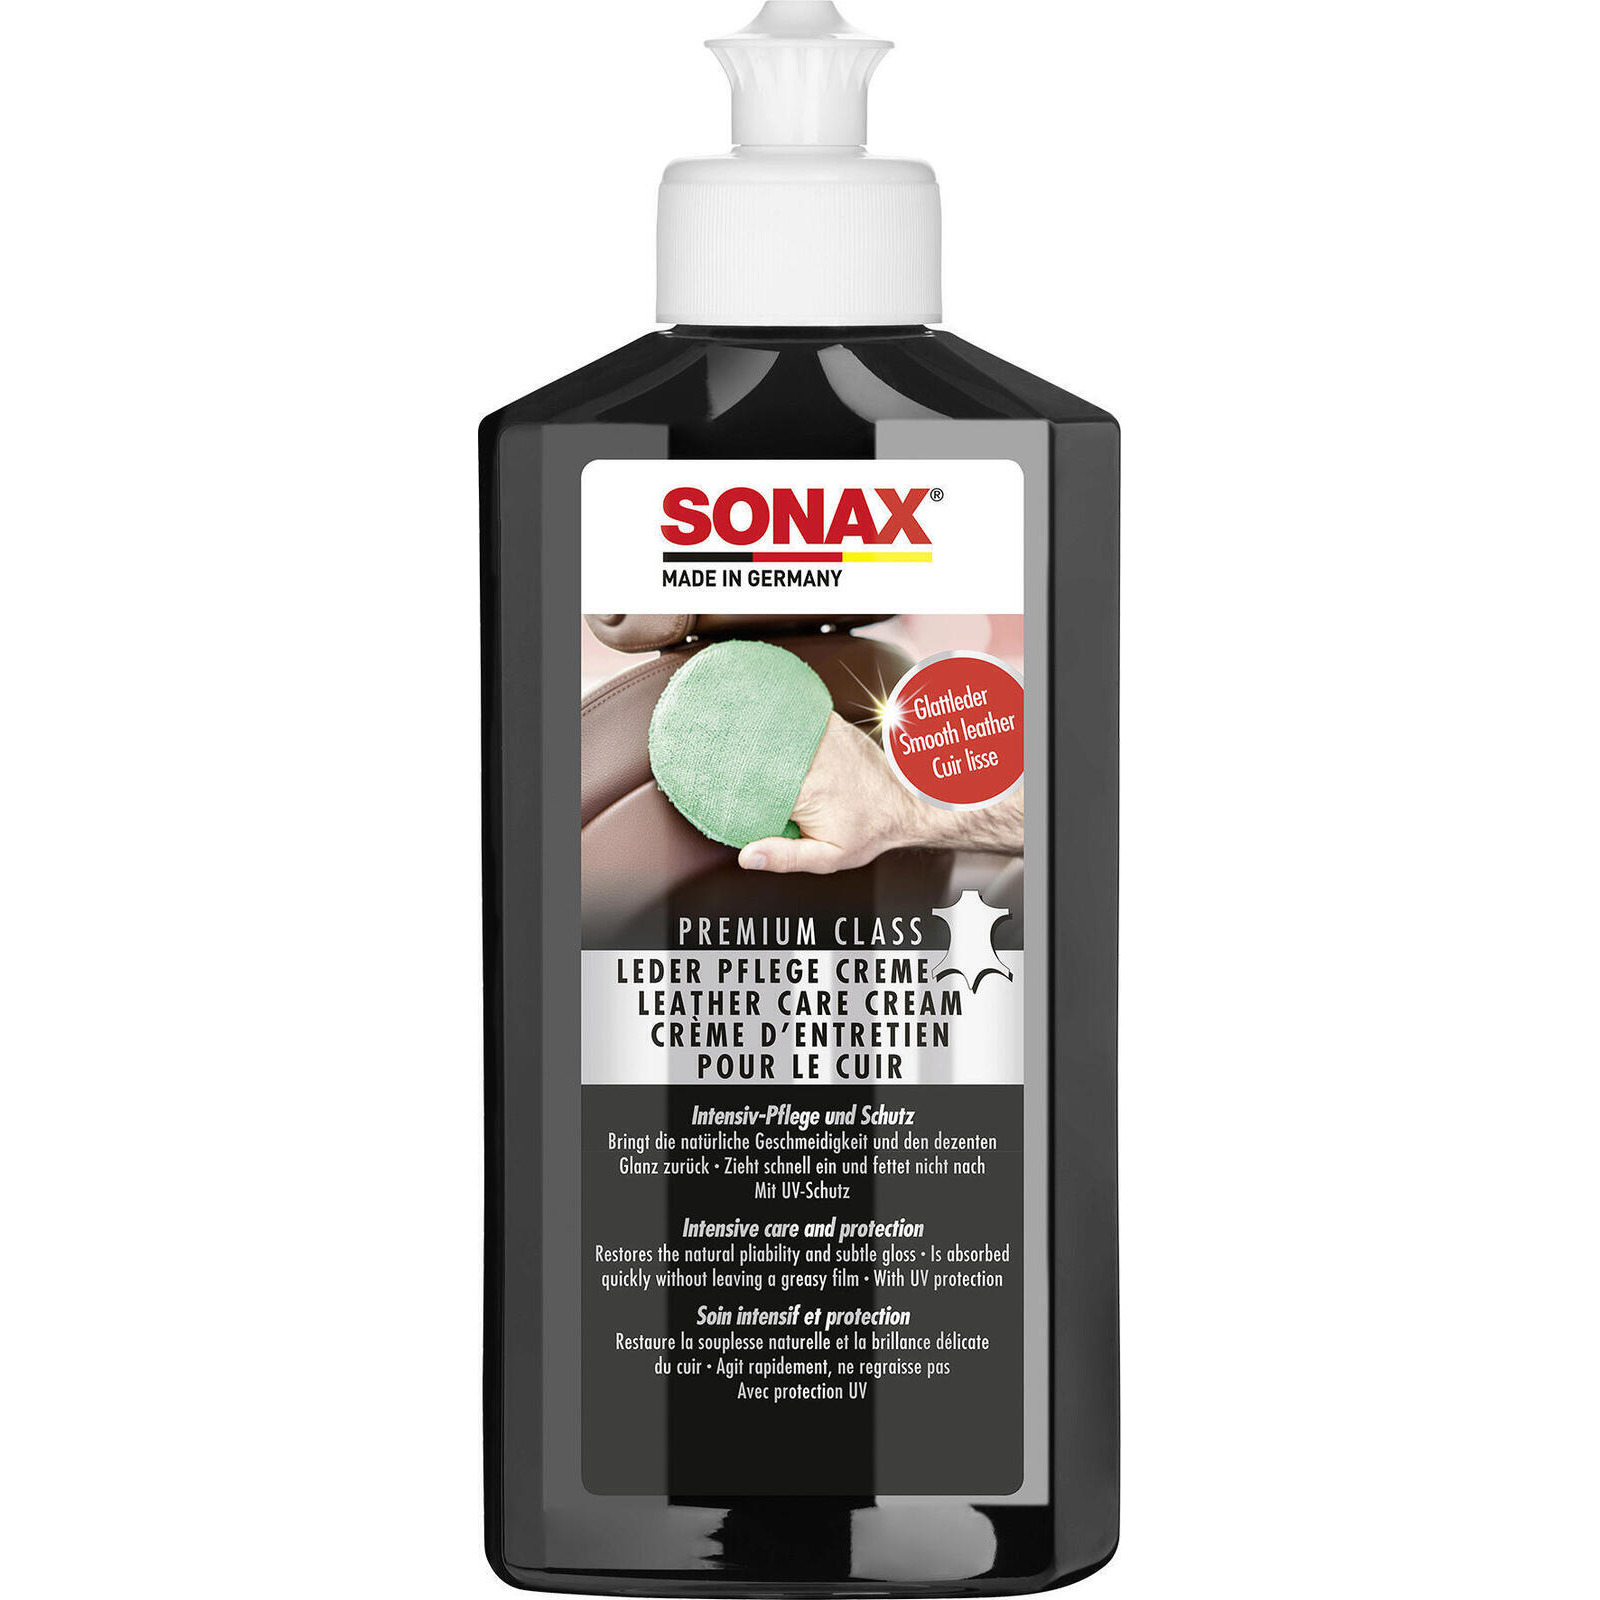 SONAX Leather Care Lotion PremiumClass Leather Care Cream